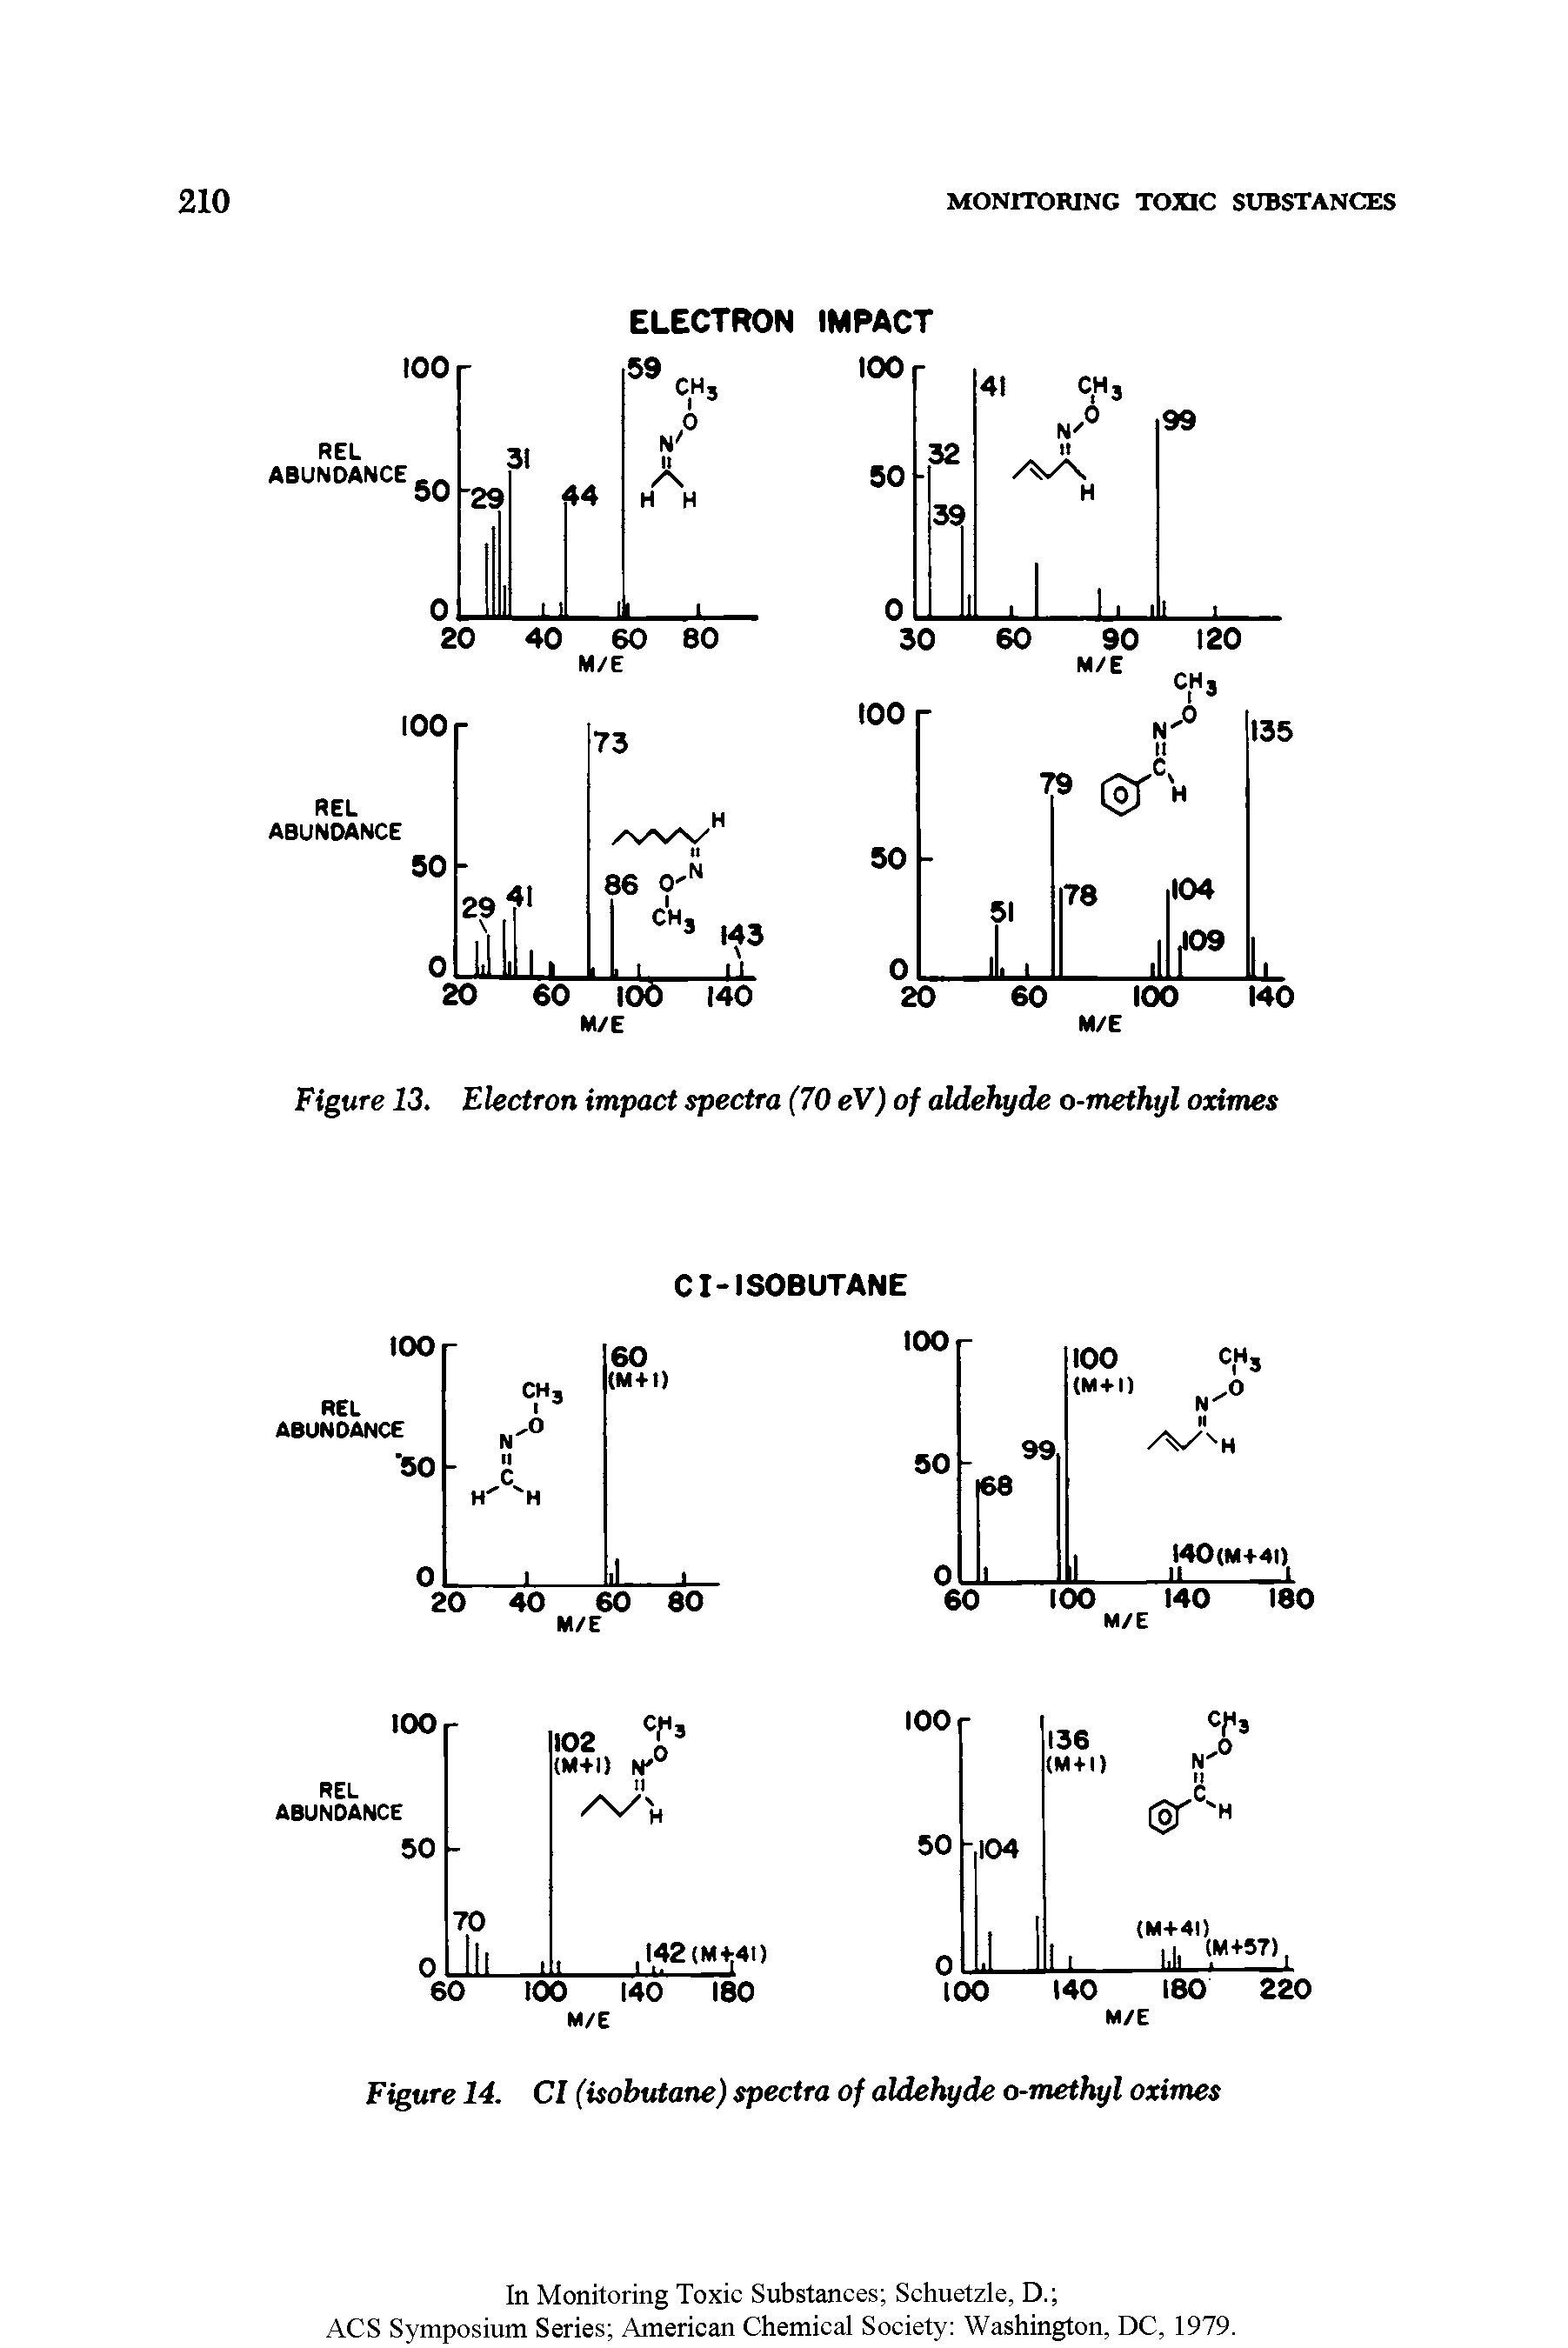 Figure 13. Electron impact spectra (70 eV) of aldehyde o-methyl oximes...